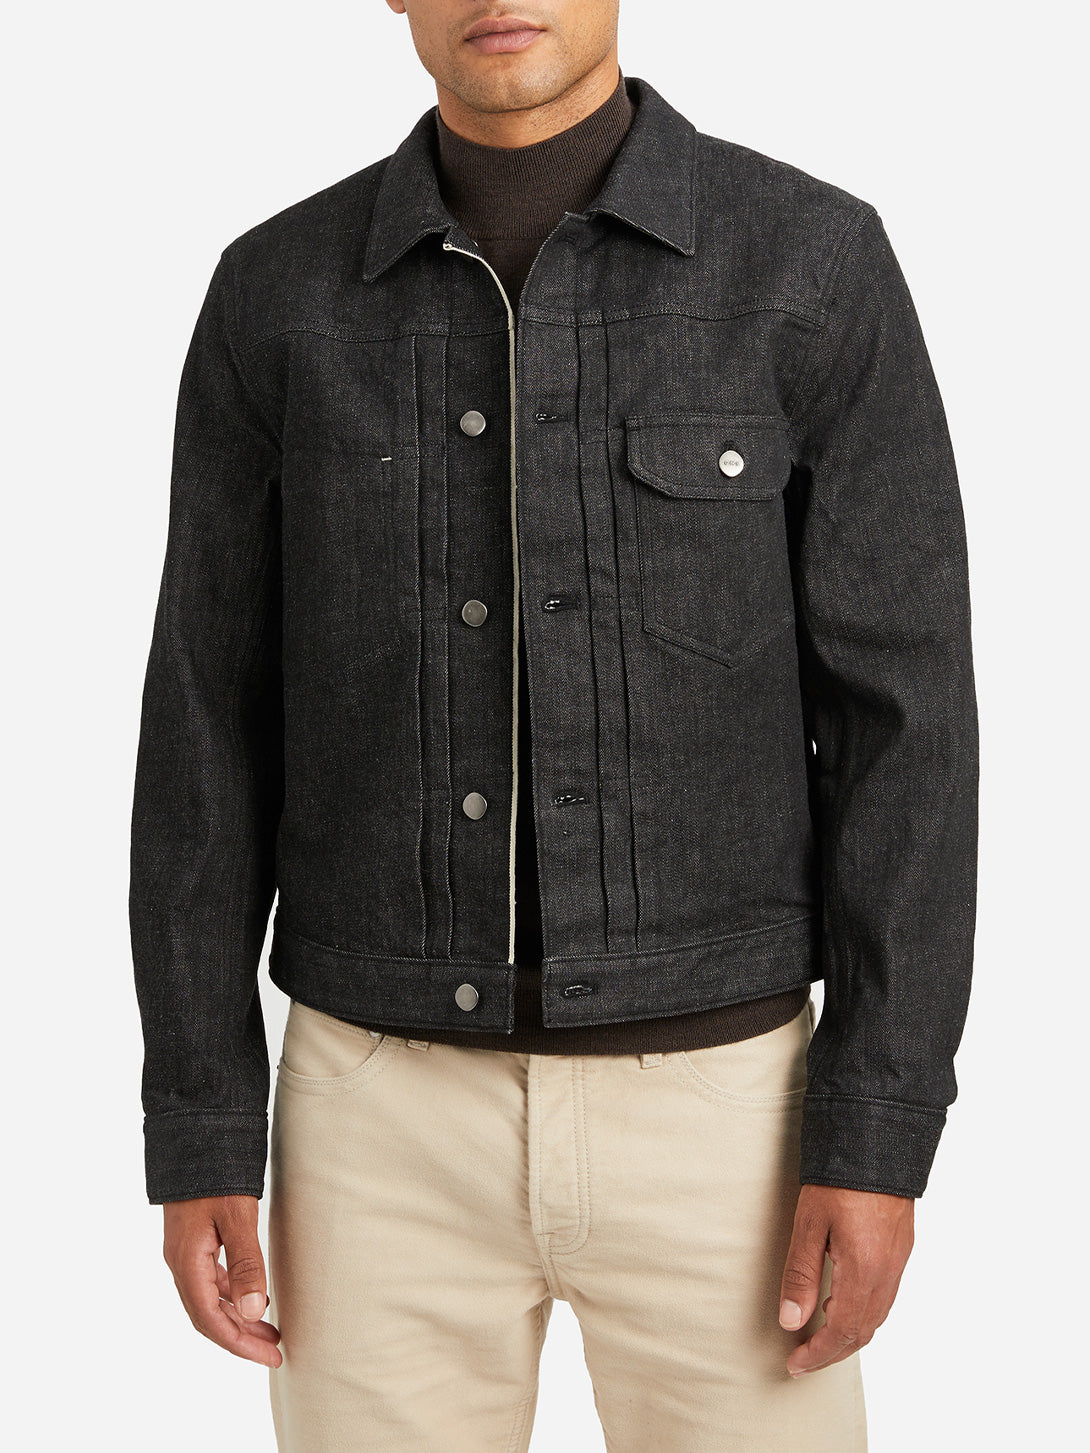 JET BLACK jean jacket for men tripp denim trucker jacket ons clothing